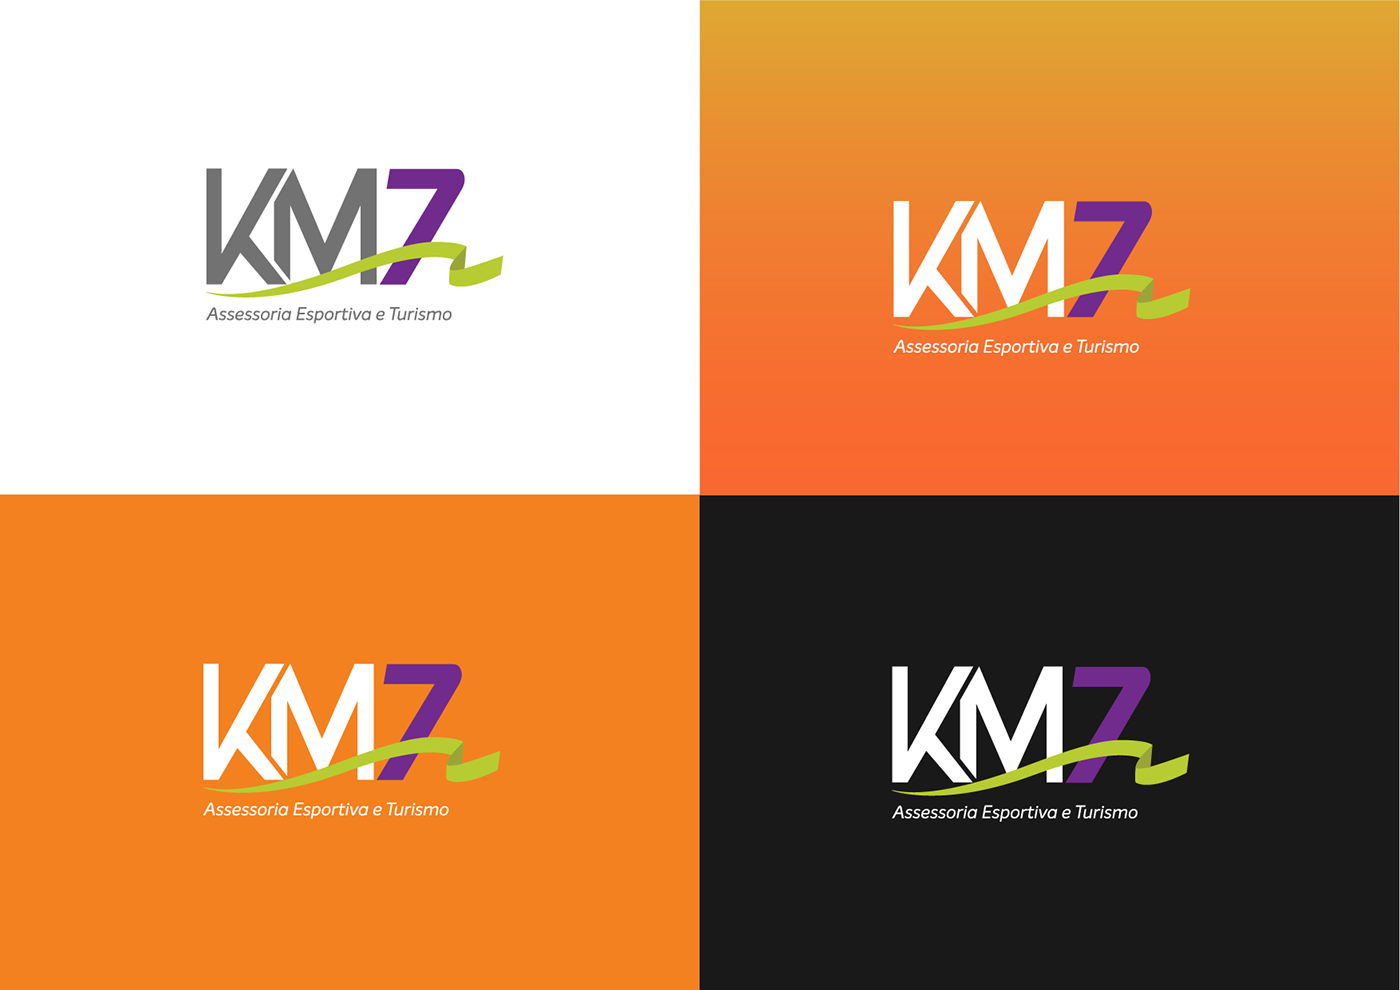 miv marcas identidade visual assessoria esportiva Turismo branding  km7 laranja roxo Verde